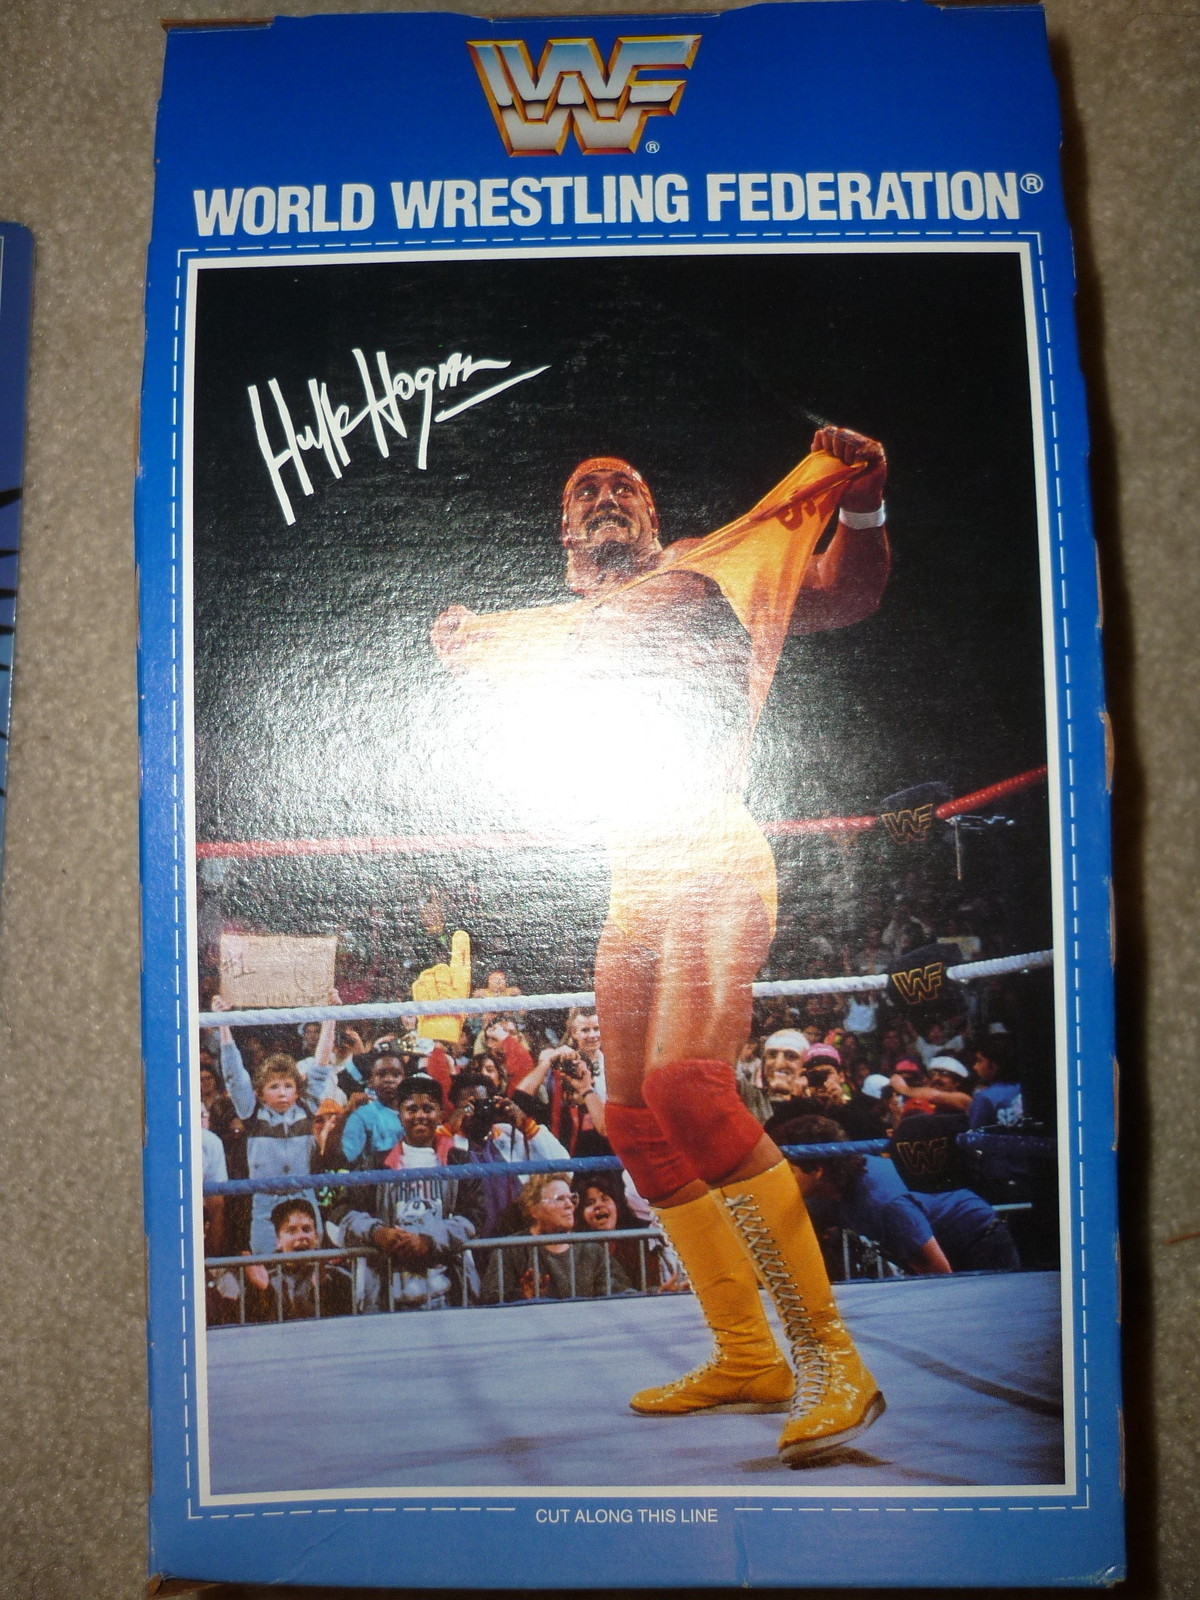 WWF Fruit Juice Drink Carton Hulk Hogan back